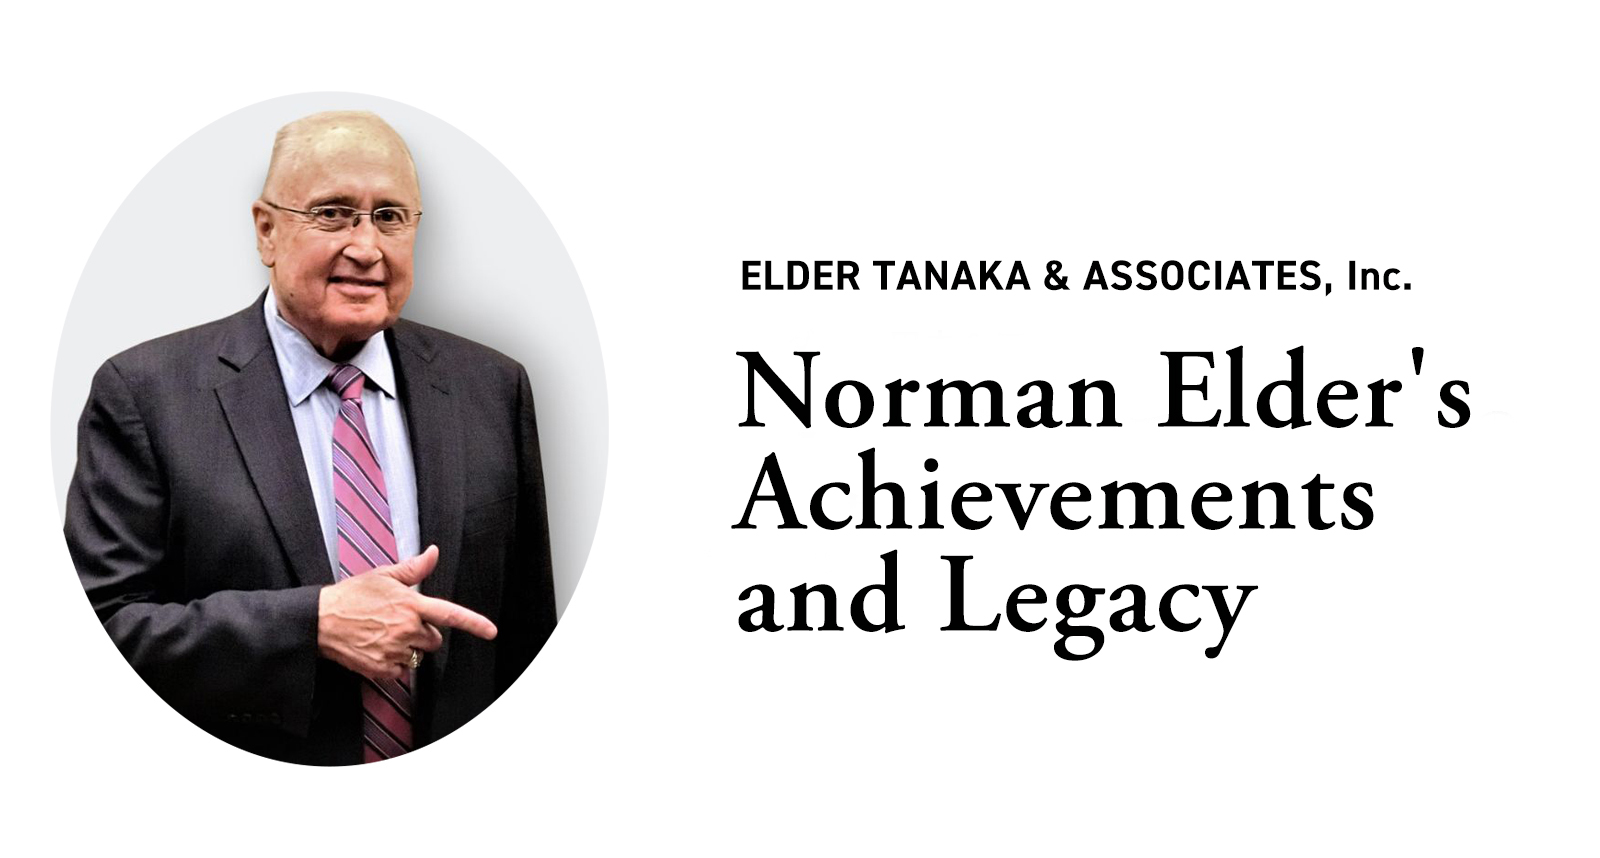 ELDER TANAKA & ASSOCIATES, INC. Norman Elder's Archievements and Legacy